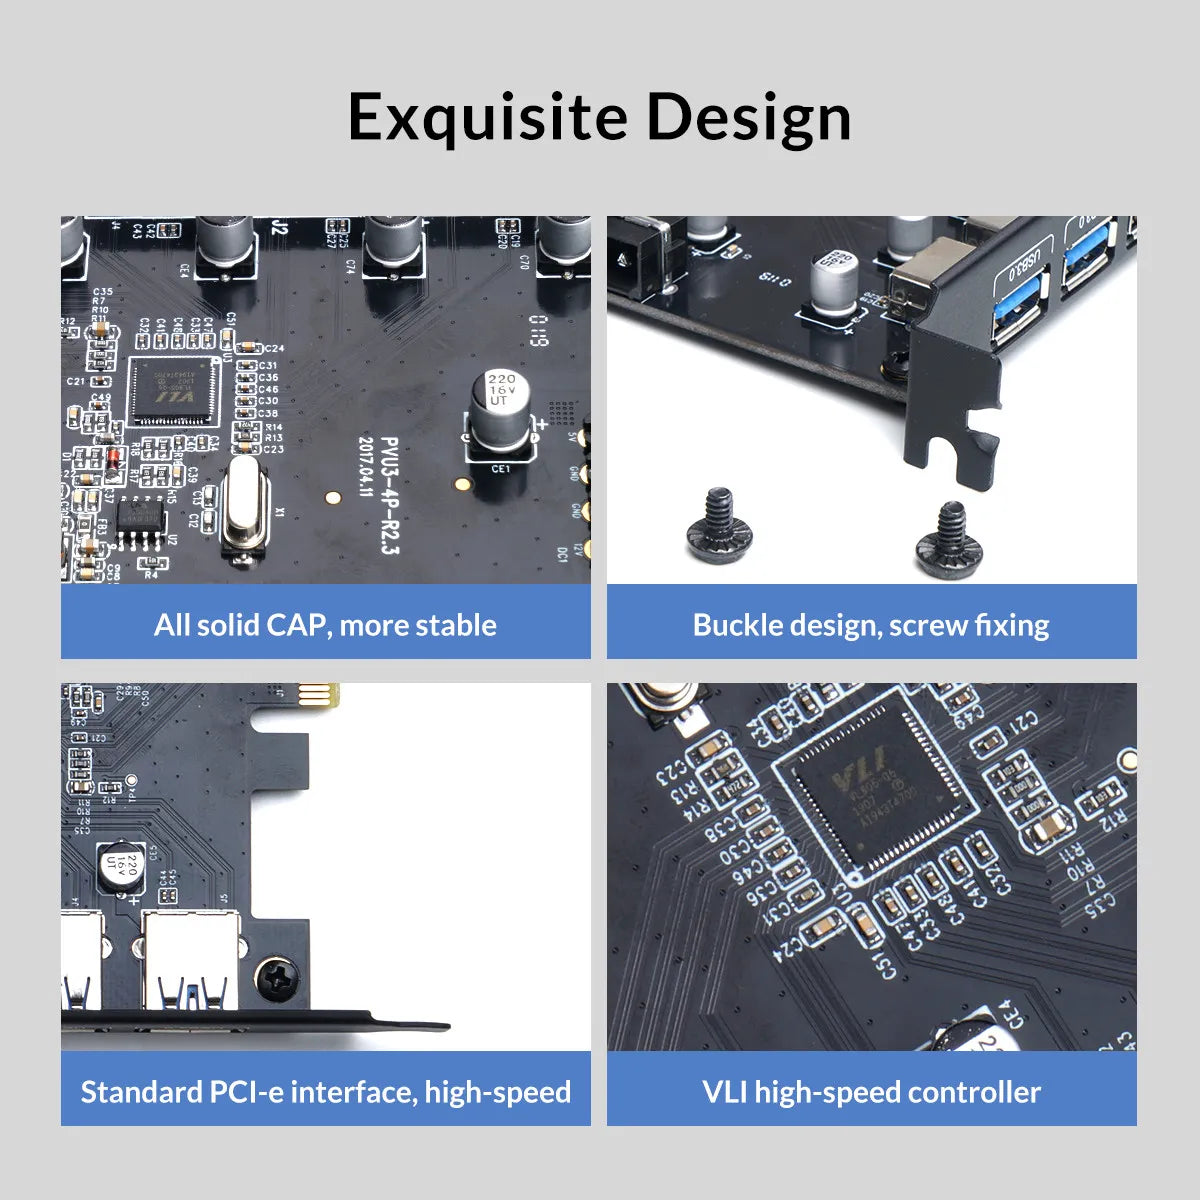 Orico PVU3-4P-V1 4 Port USB3.0 PCIe Expansion Card